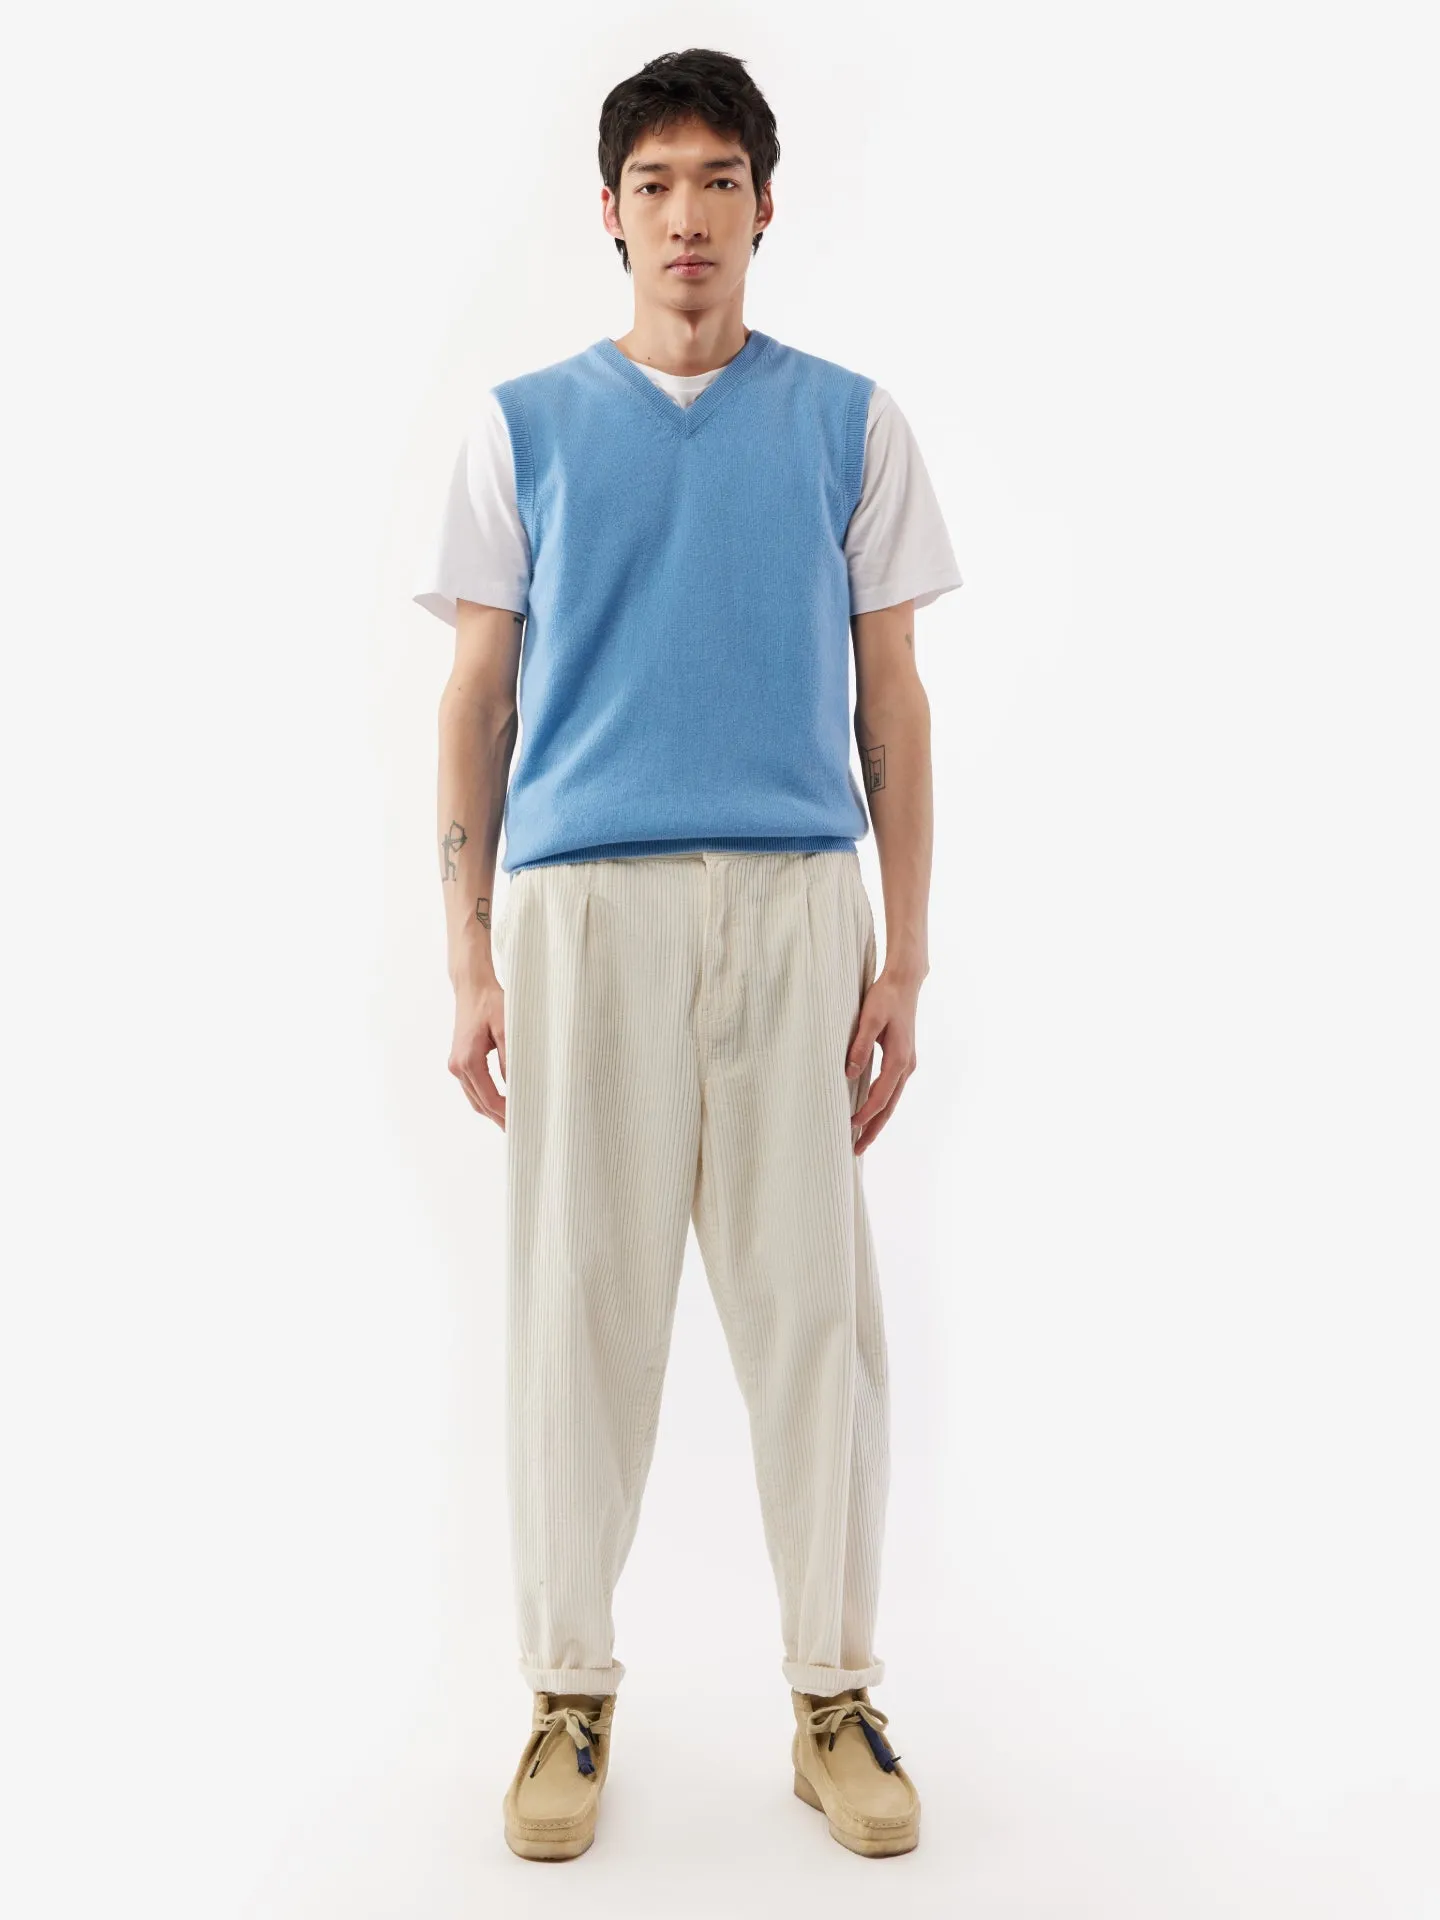 Men's Cashmere Vest Azure Blue - Gobi Cashmere